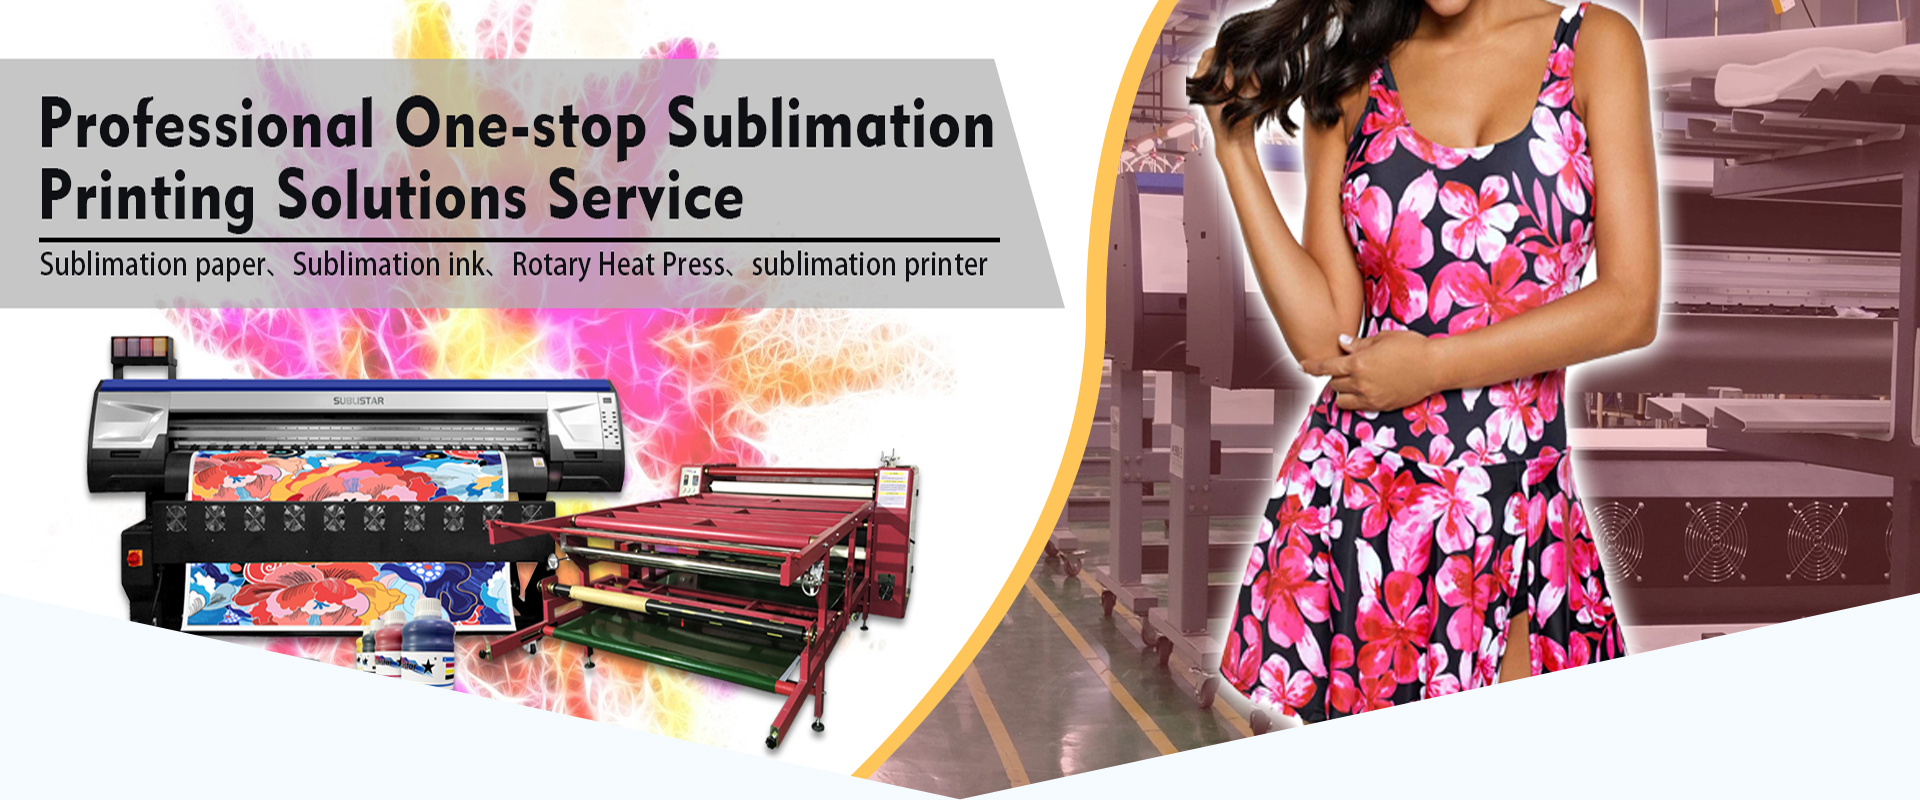 PRO Industrial Sublimation Printer